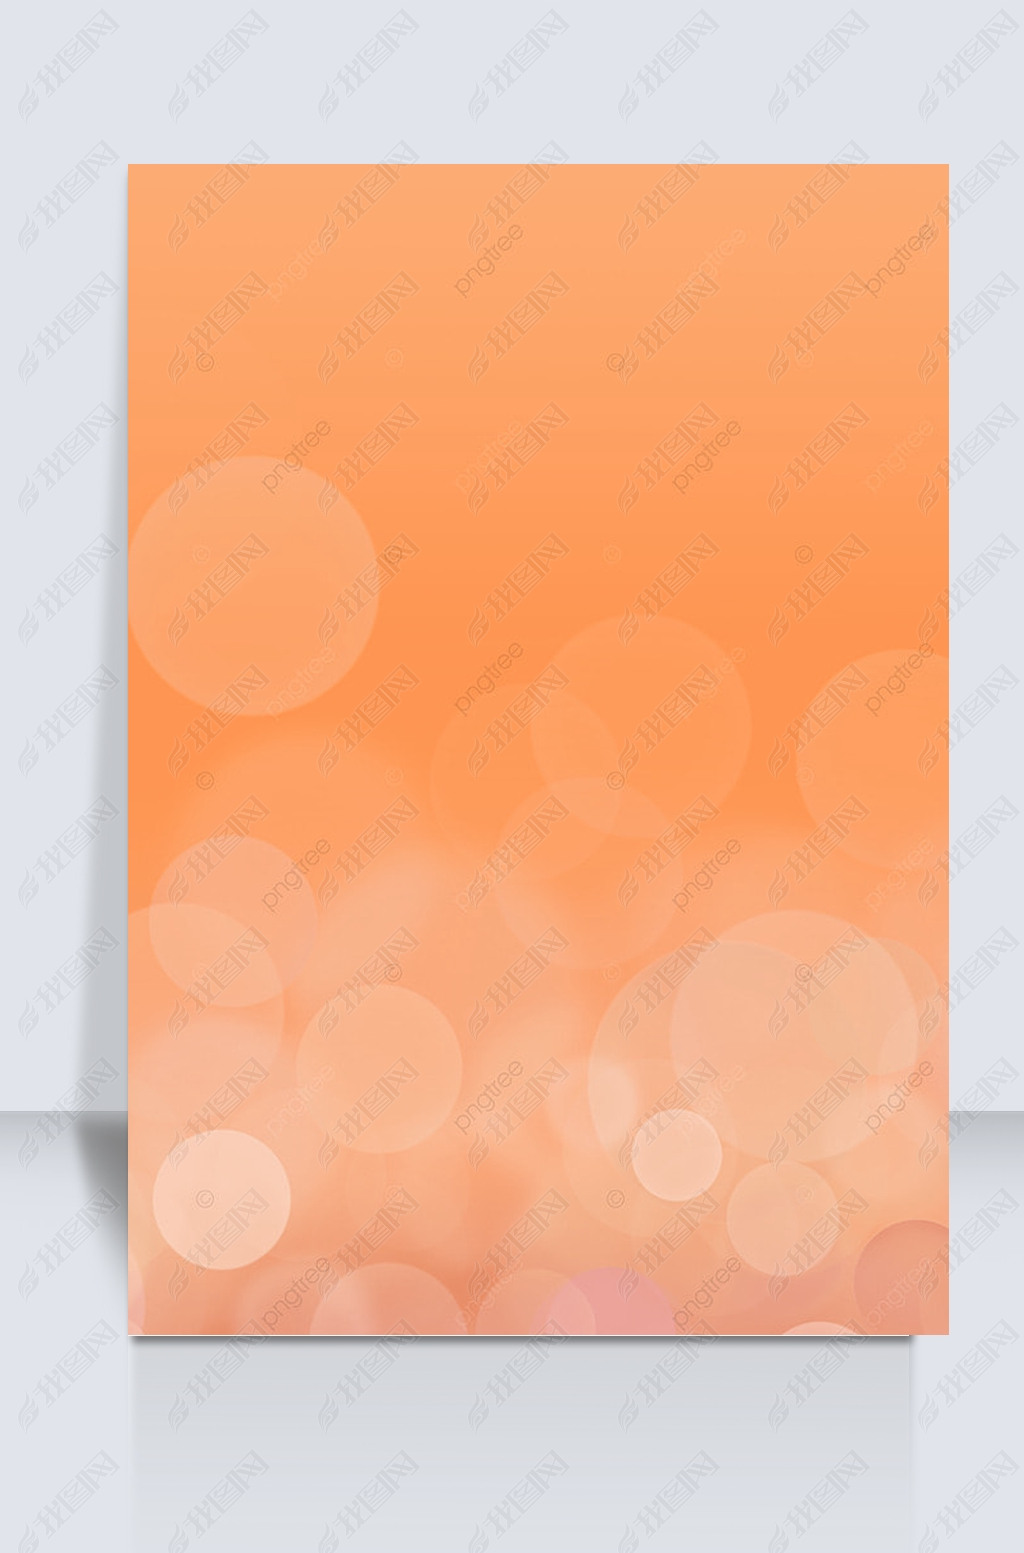 light orange background blur spot dream